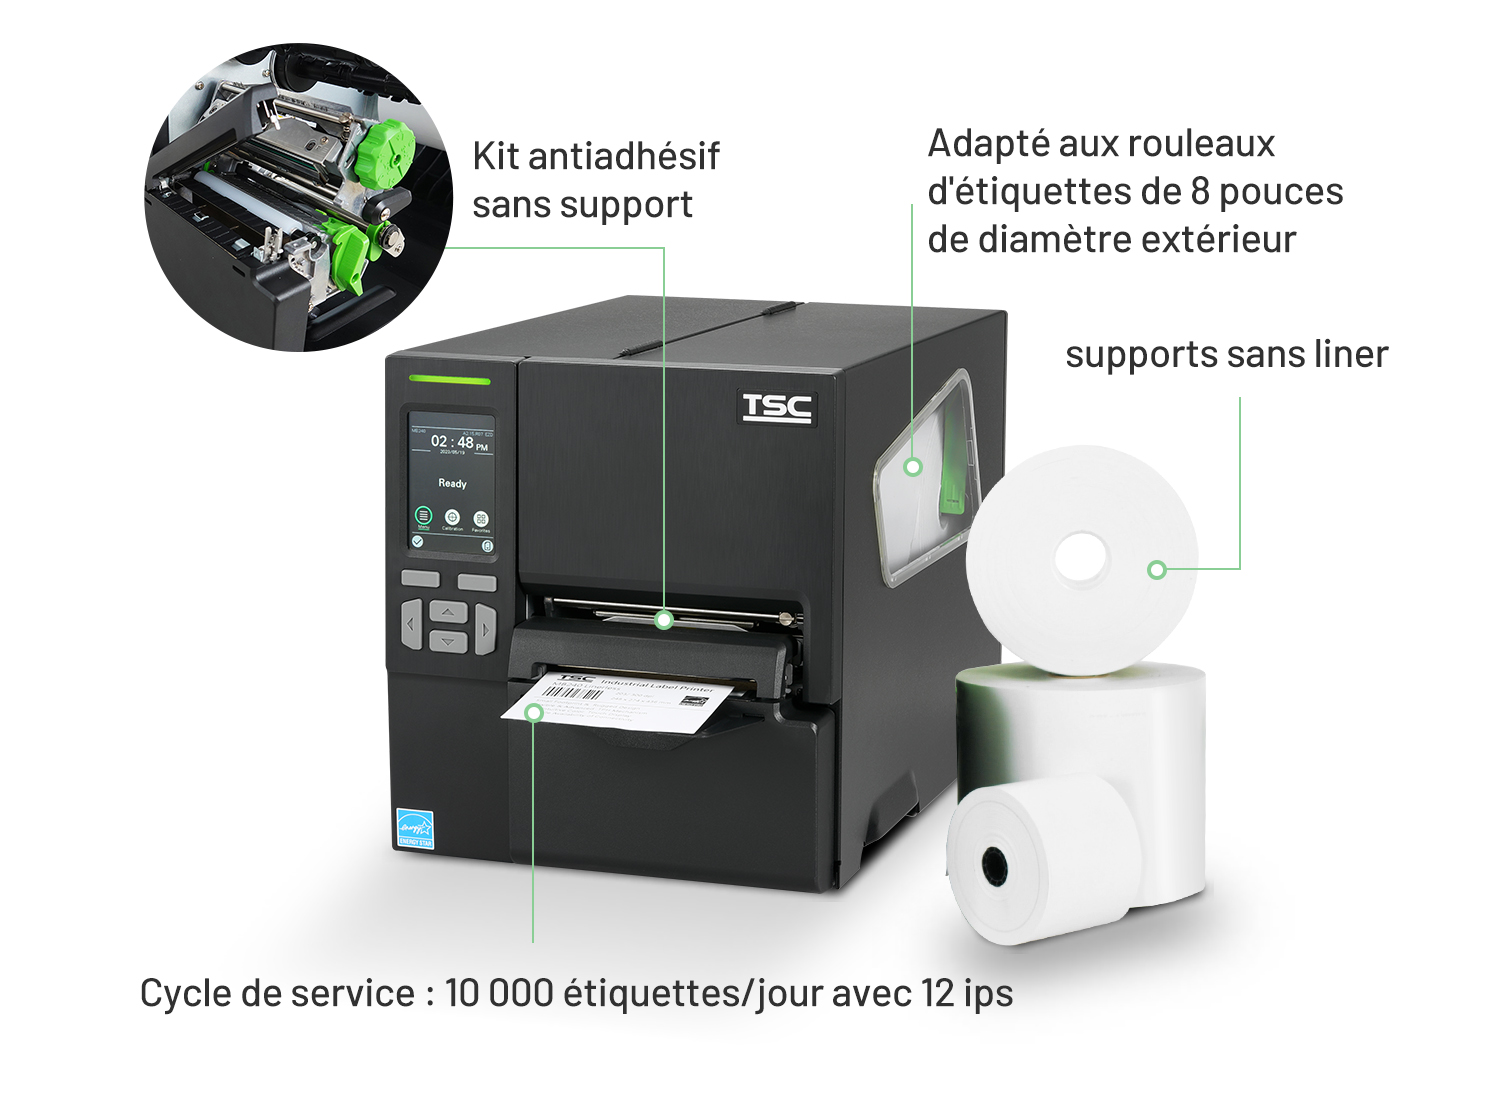 4 Reasons to Choose the MB240 Linerless Industrial Printer